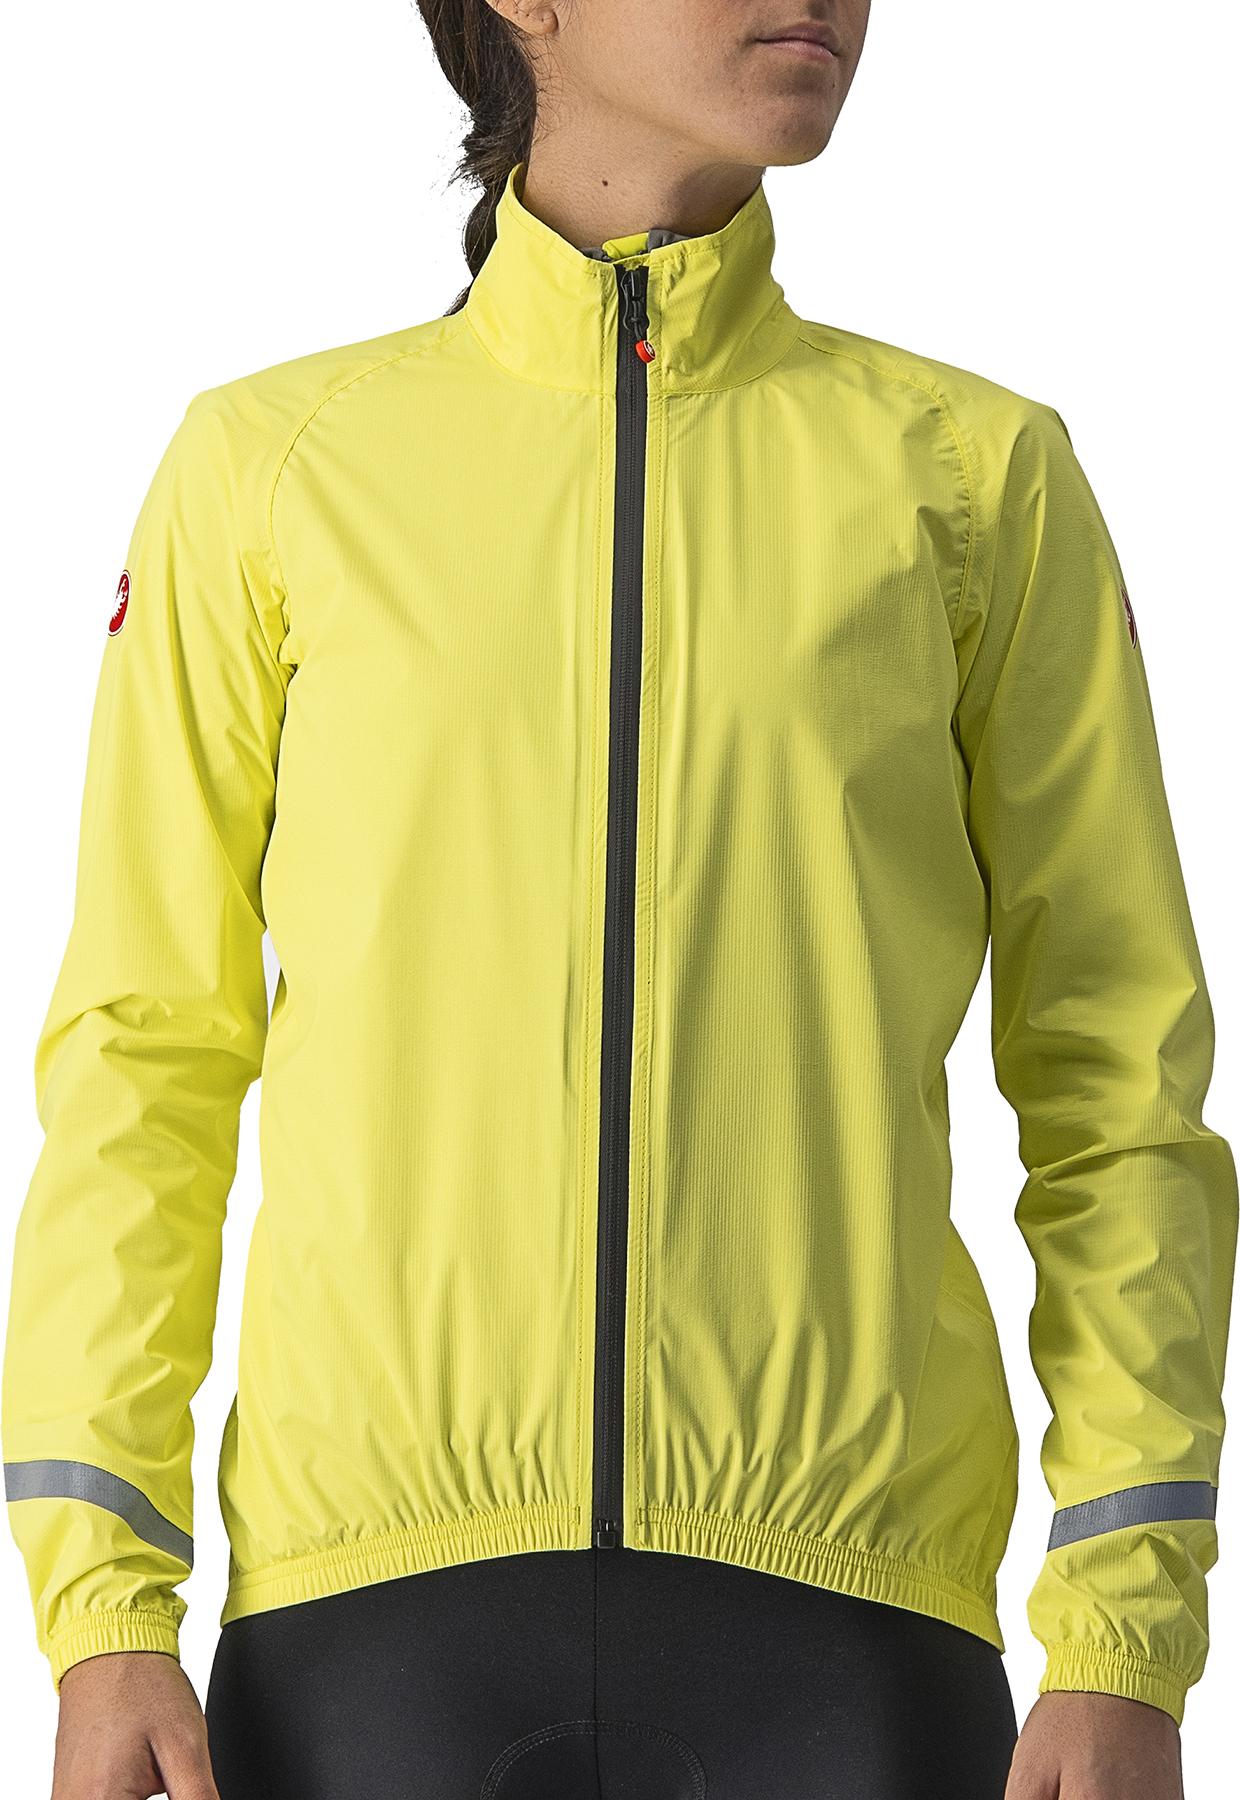 Castelli Womens Emergency Rain Jacket - Brilliant Yellow